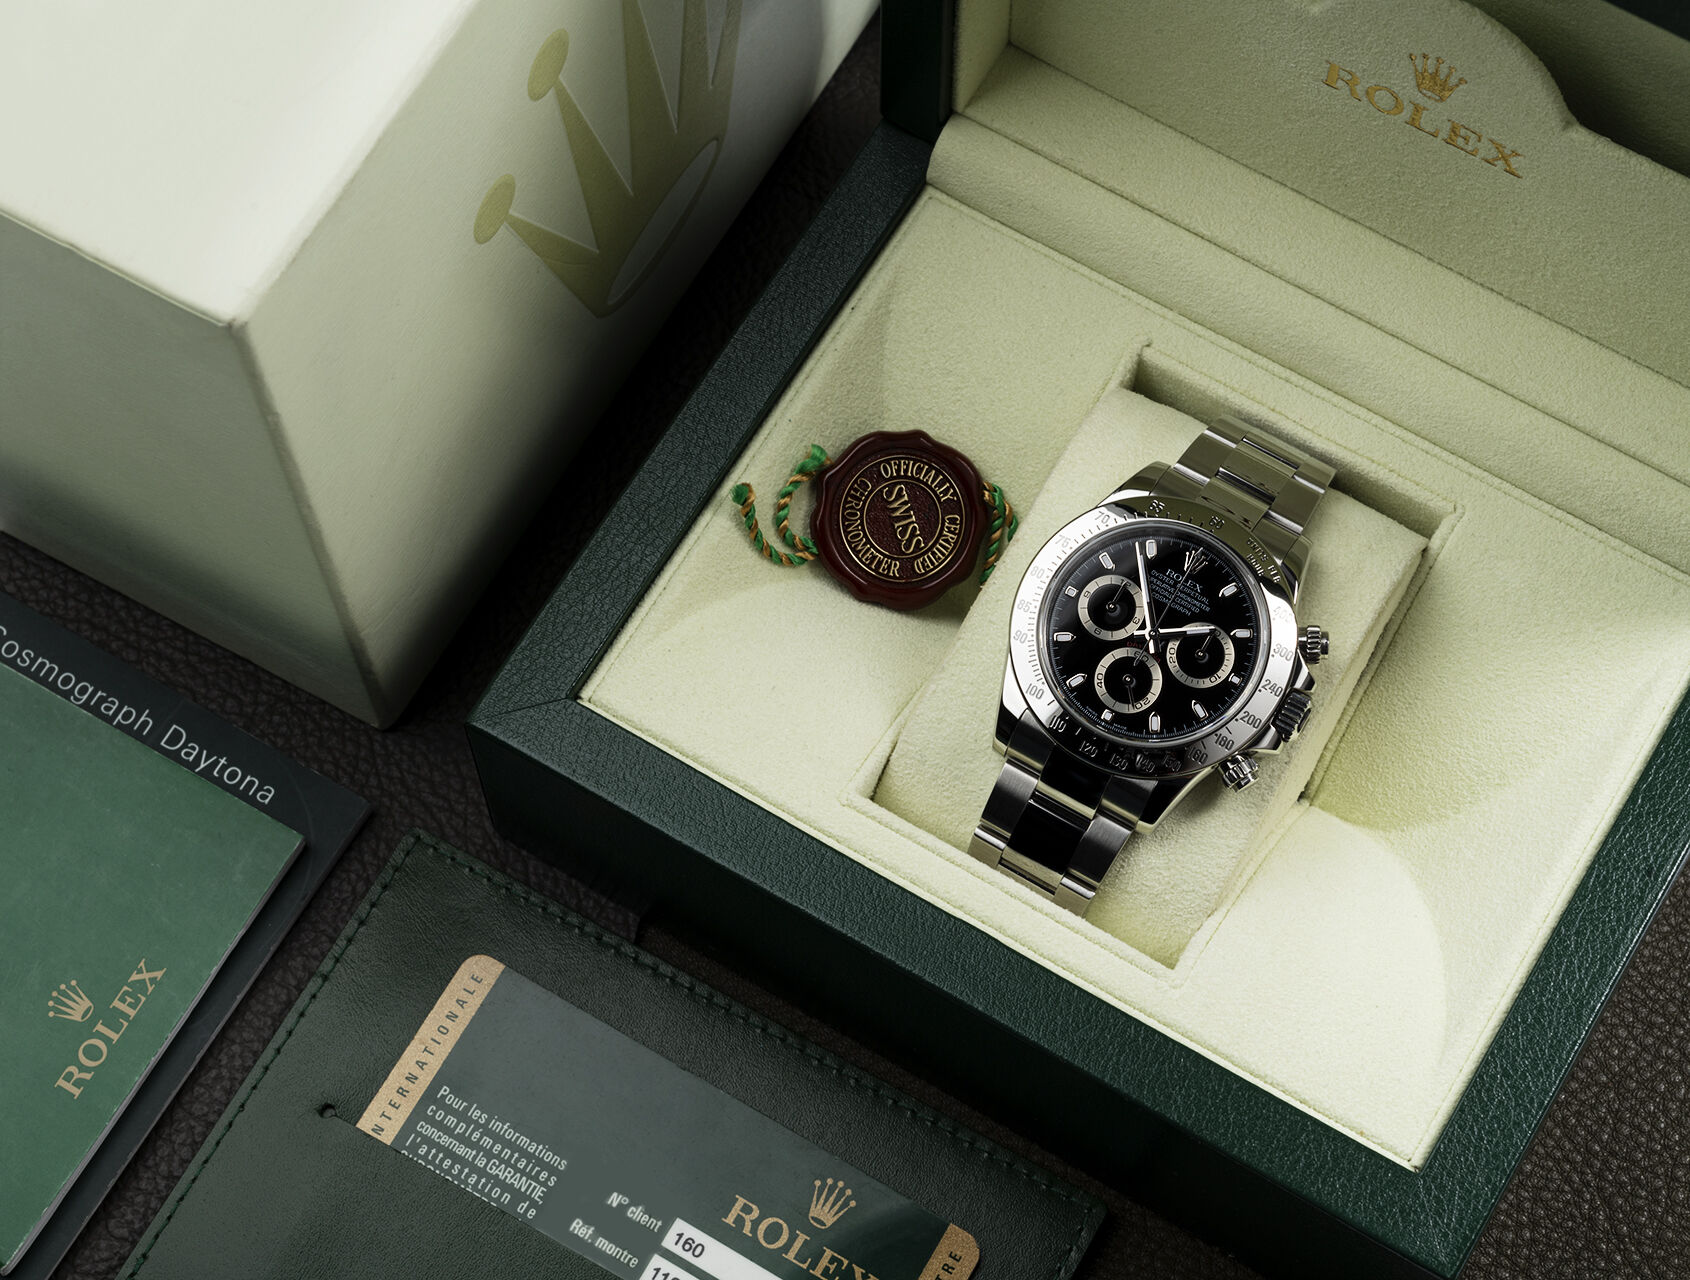 ref 116520 | 116520 - Box & Certificate | Rolex Cosmograph Daytona